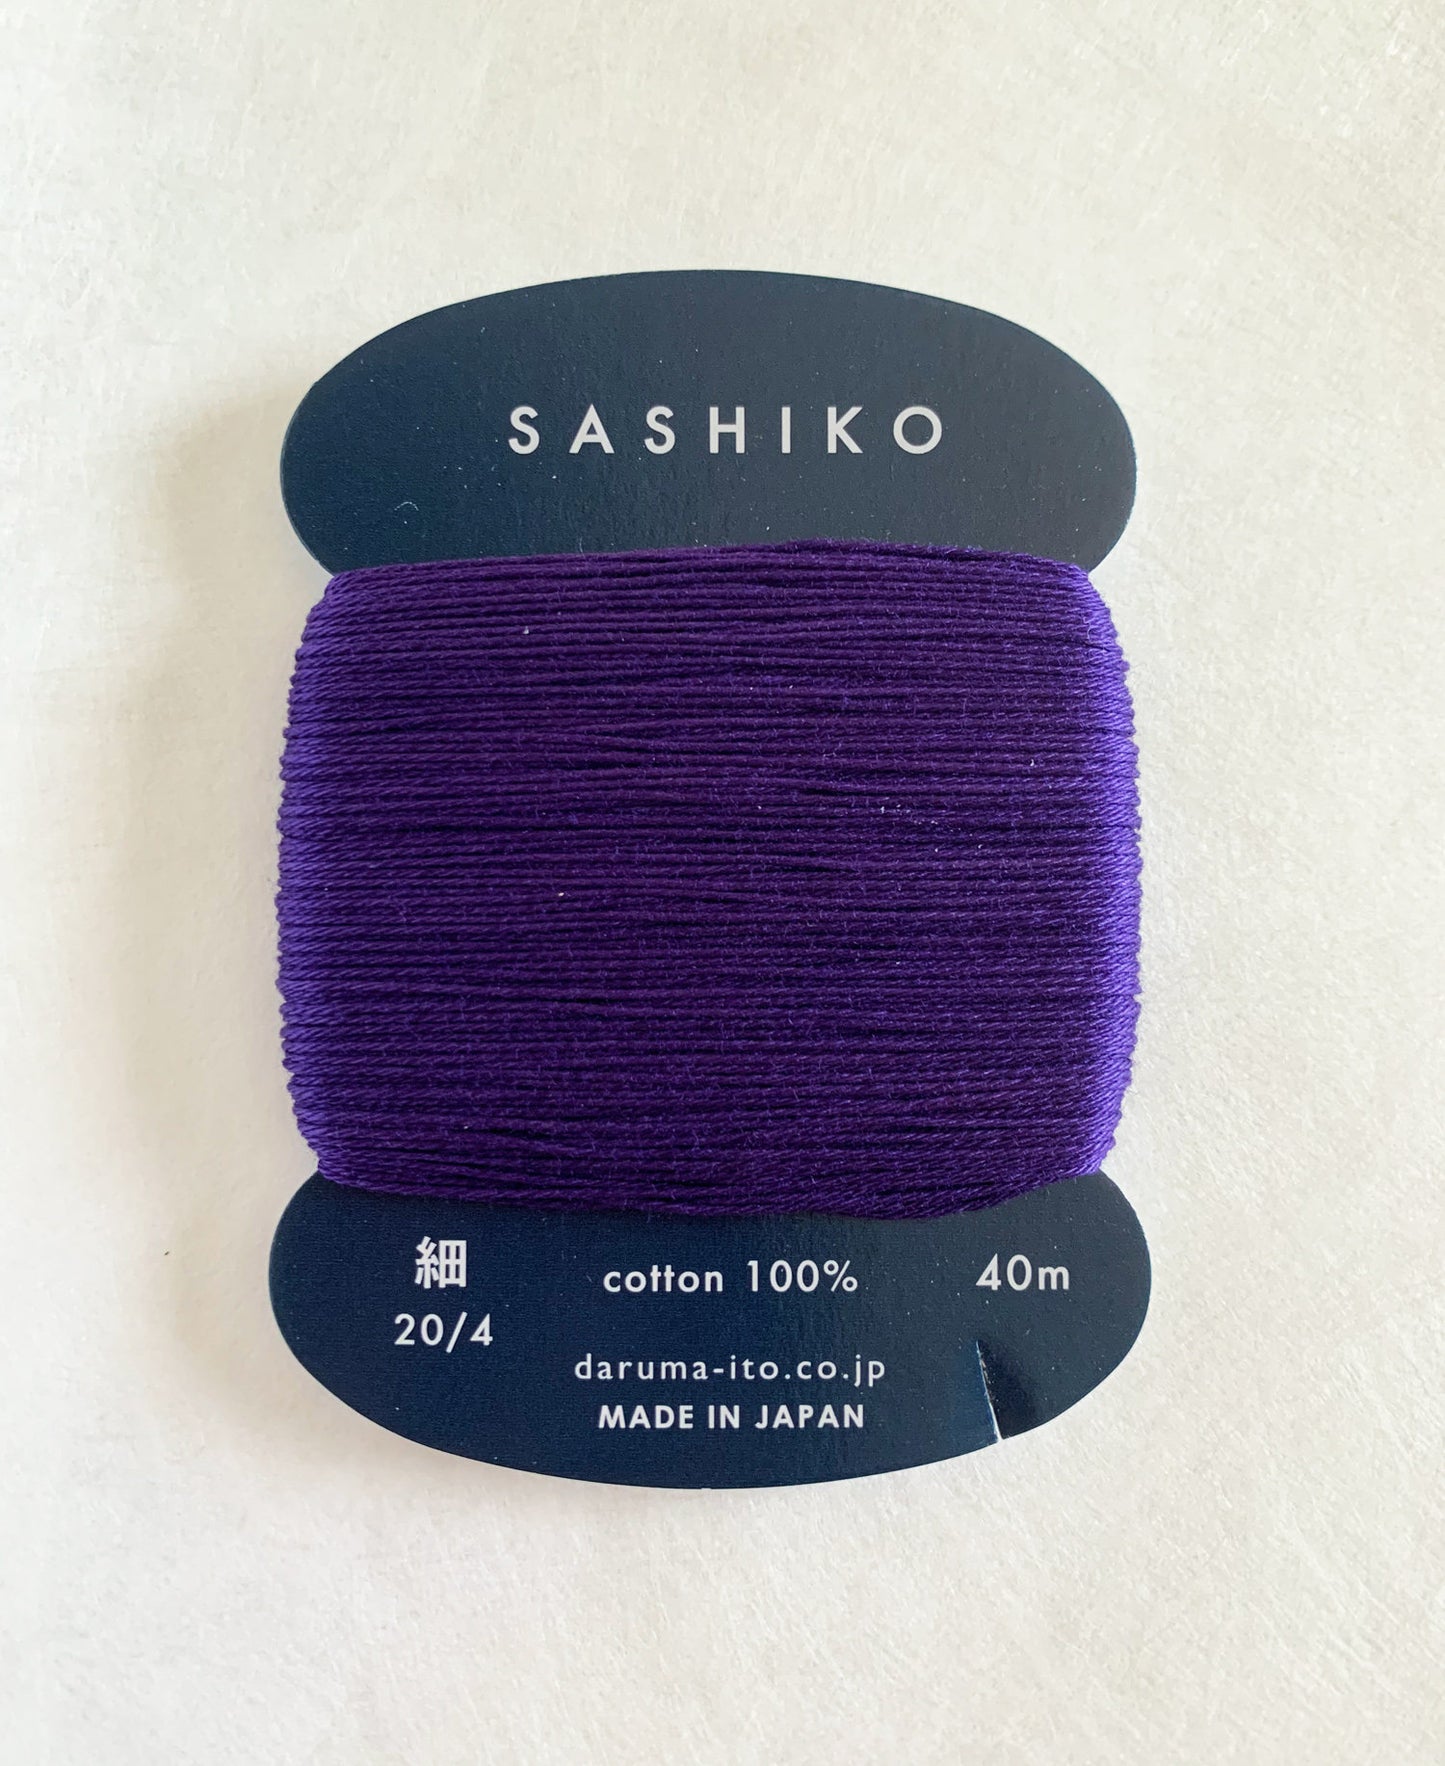 Daruma #223 GRAPE Japanese Cotton SASHIKO thread 40 meter card 20/4 ぶどう grape purple